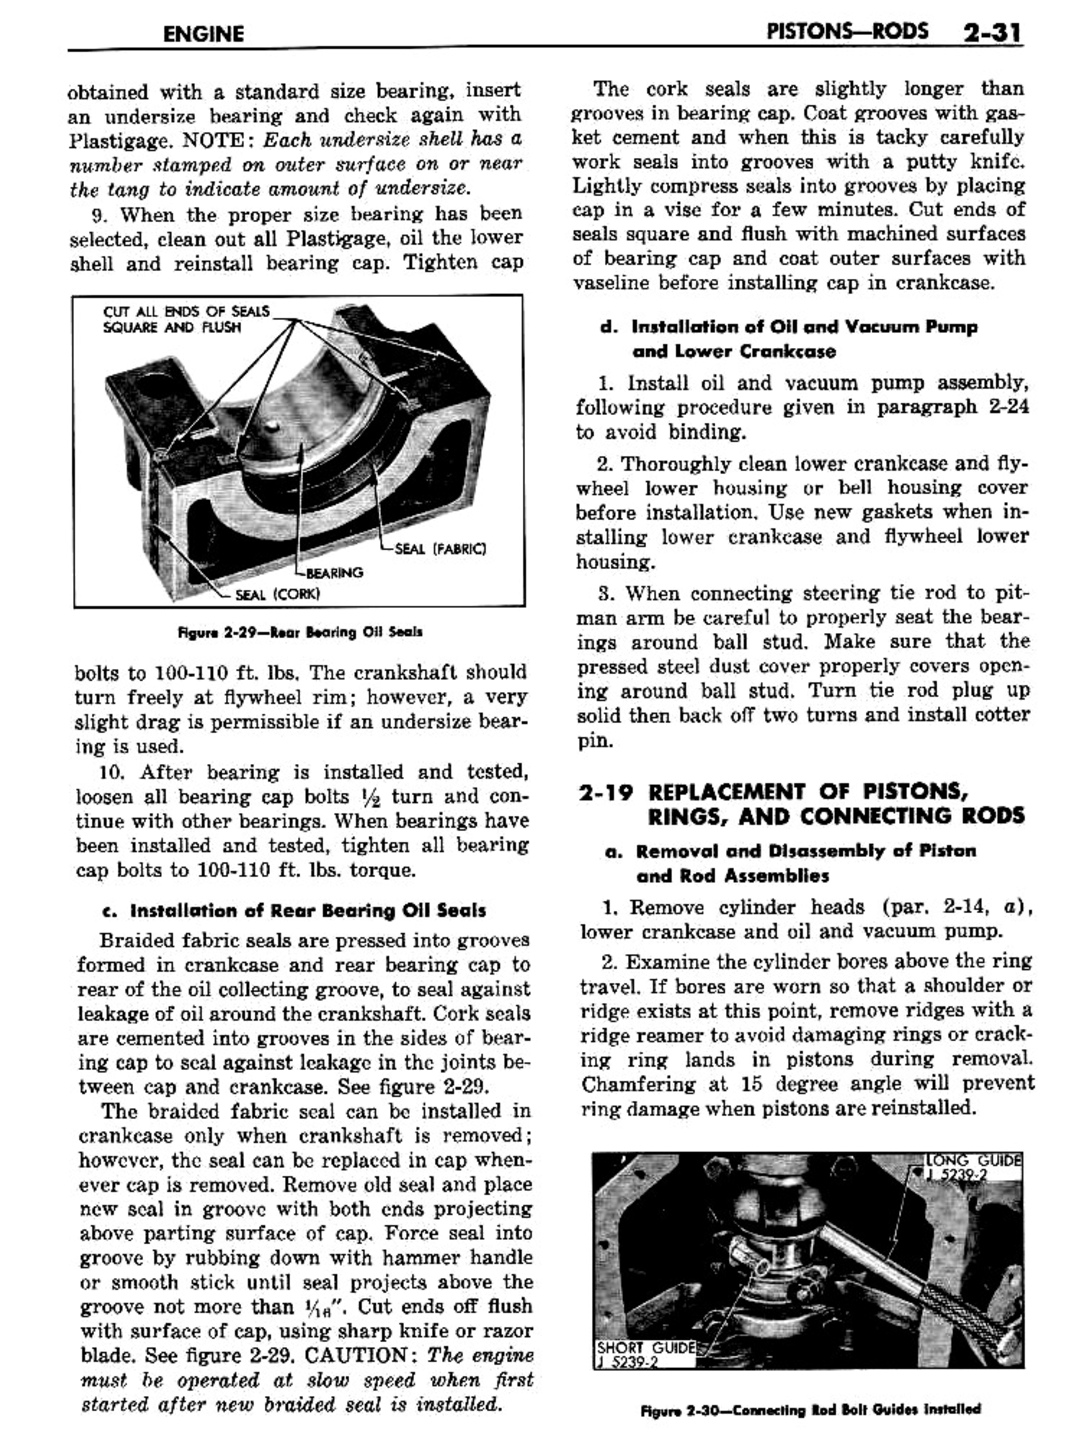 n_03 1957 Buick Shop Manual - Engine-031-031.jpg